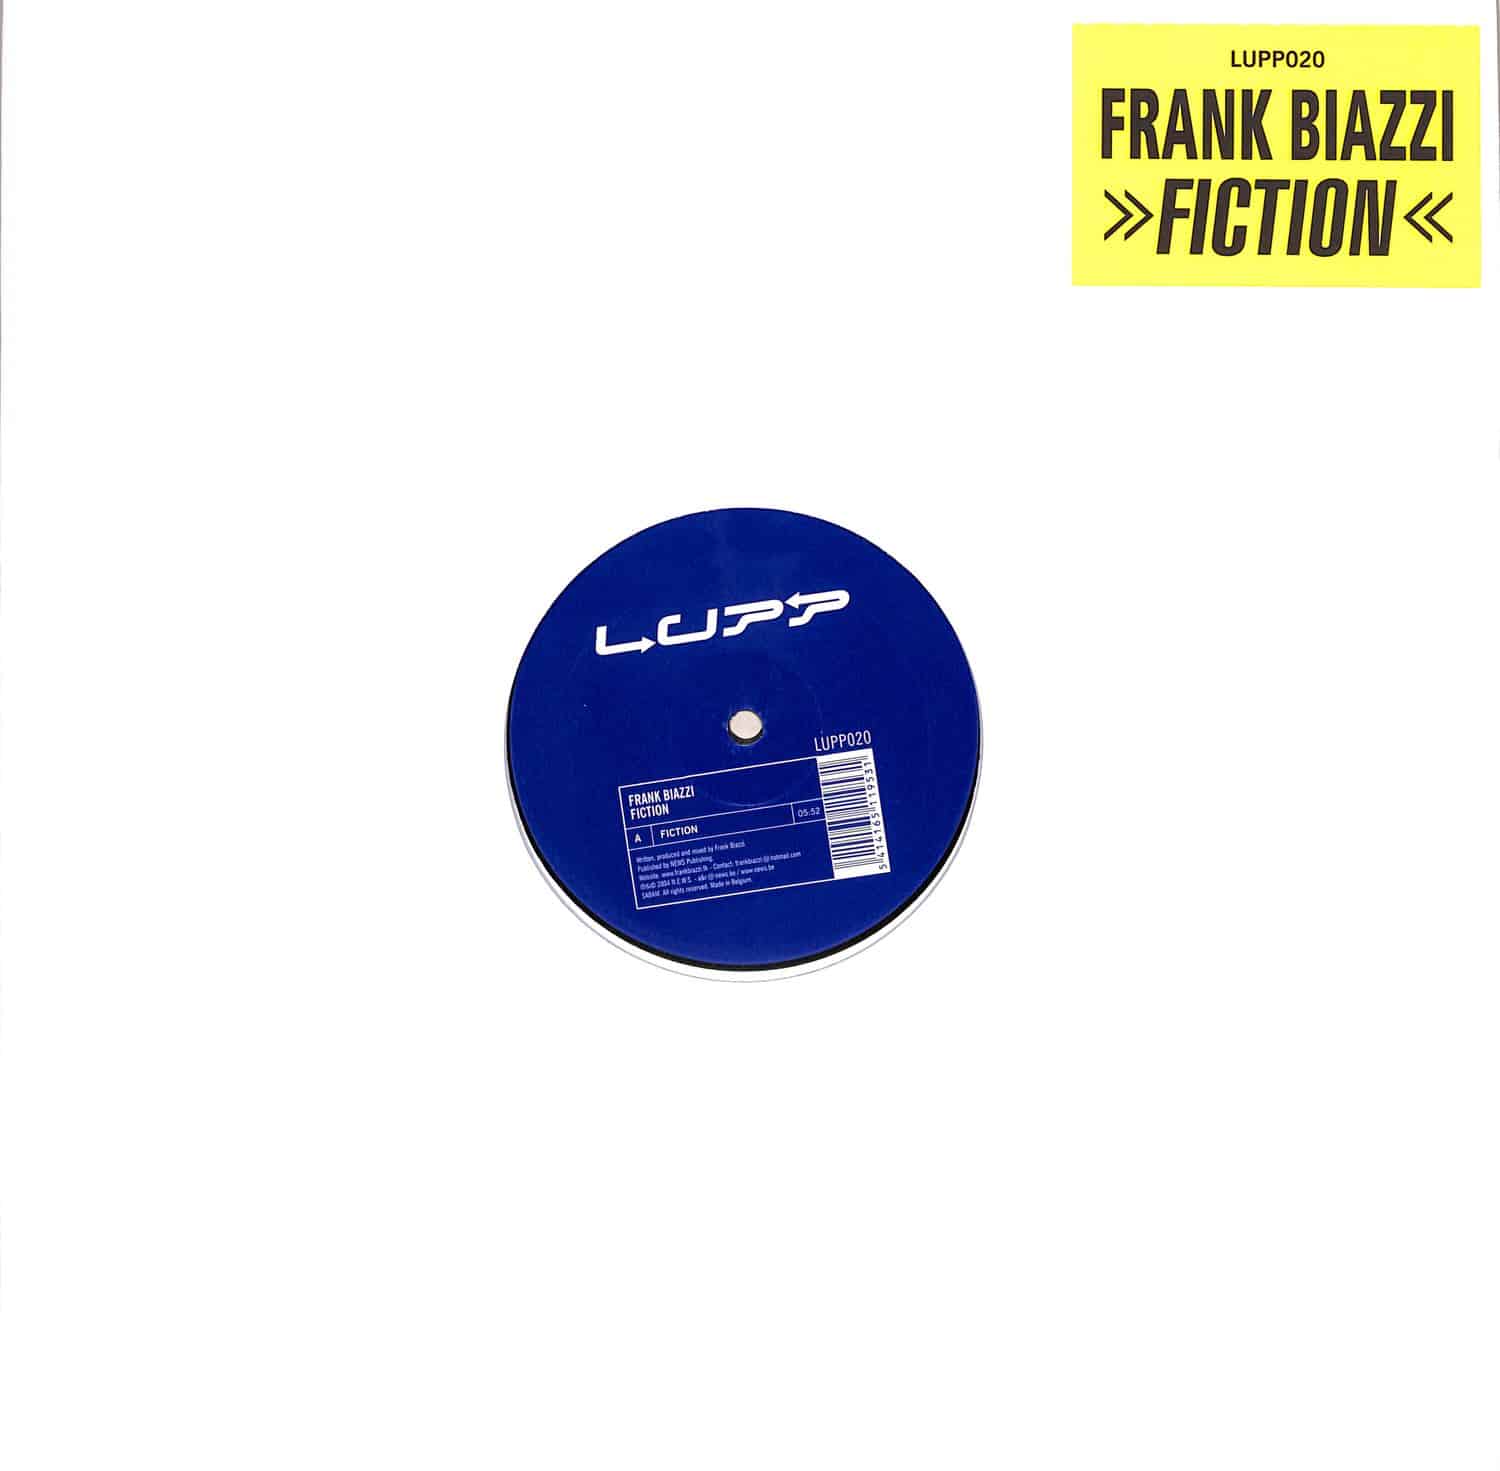 Frank Biazzi - FICTION